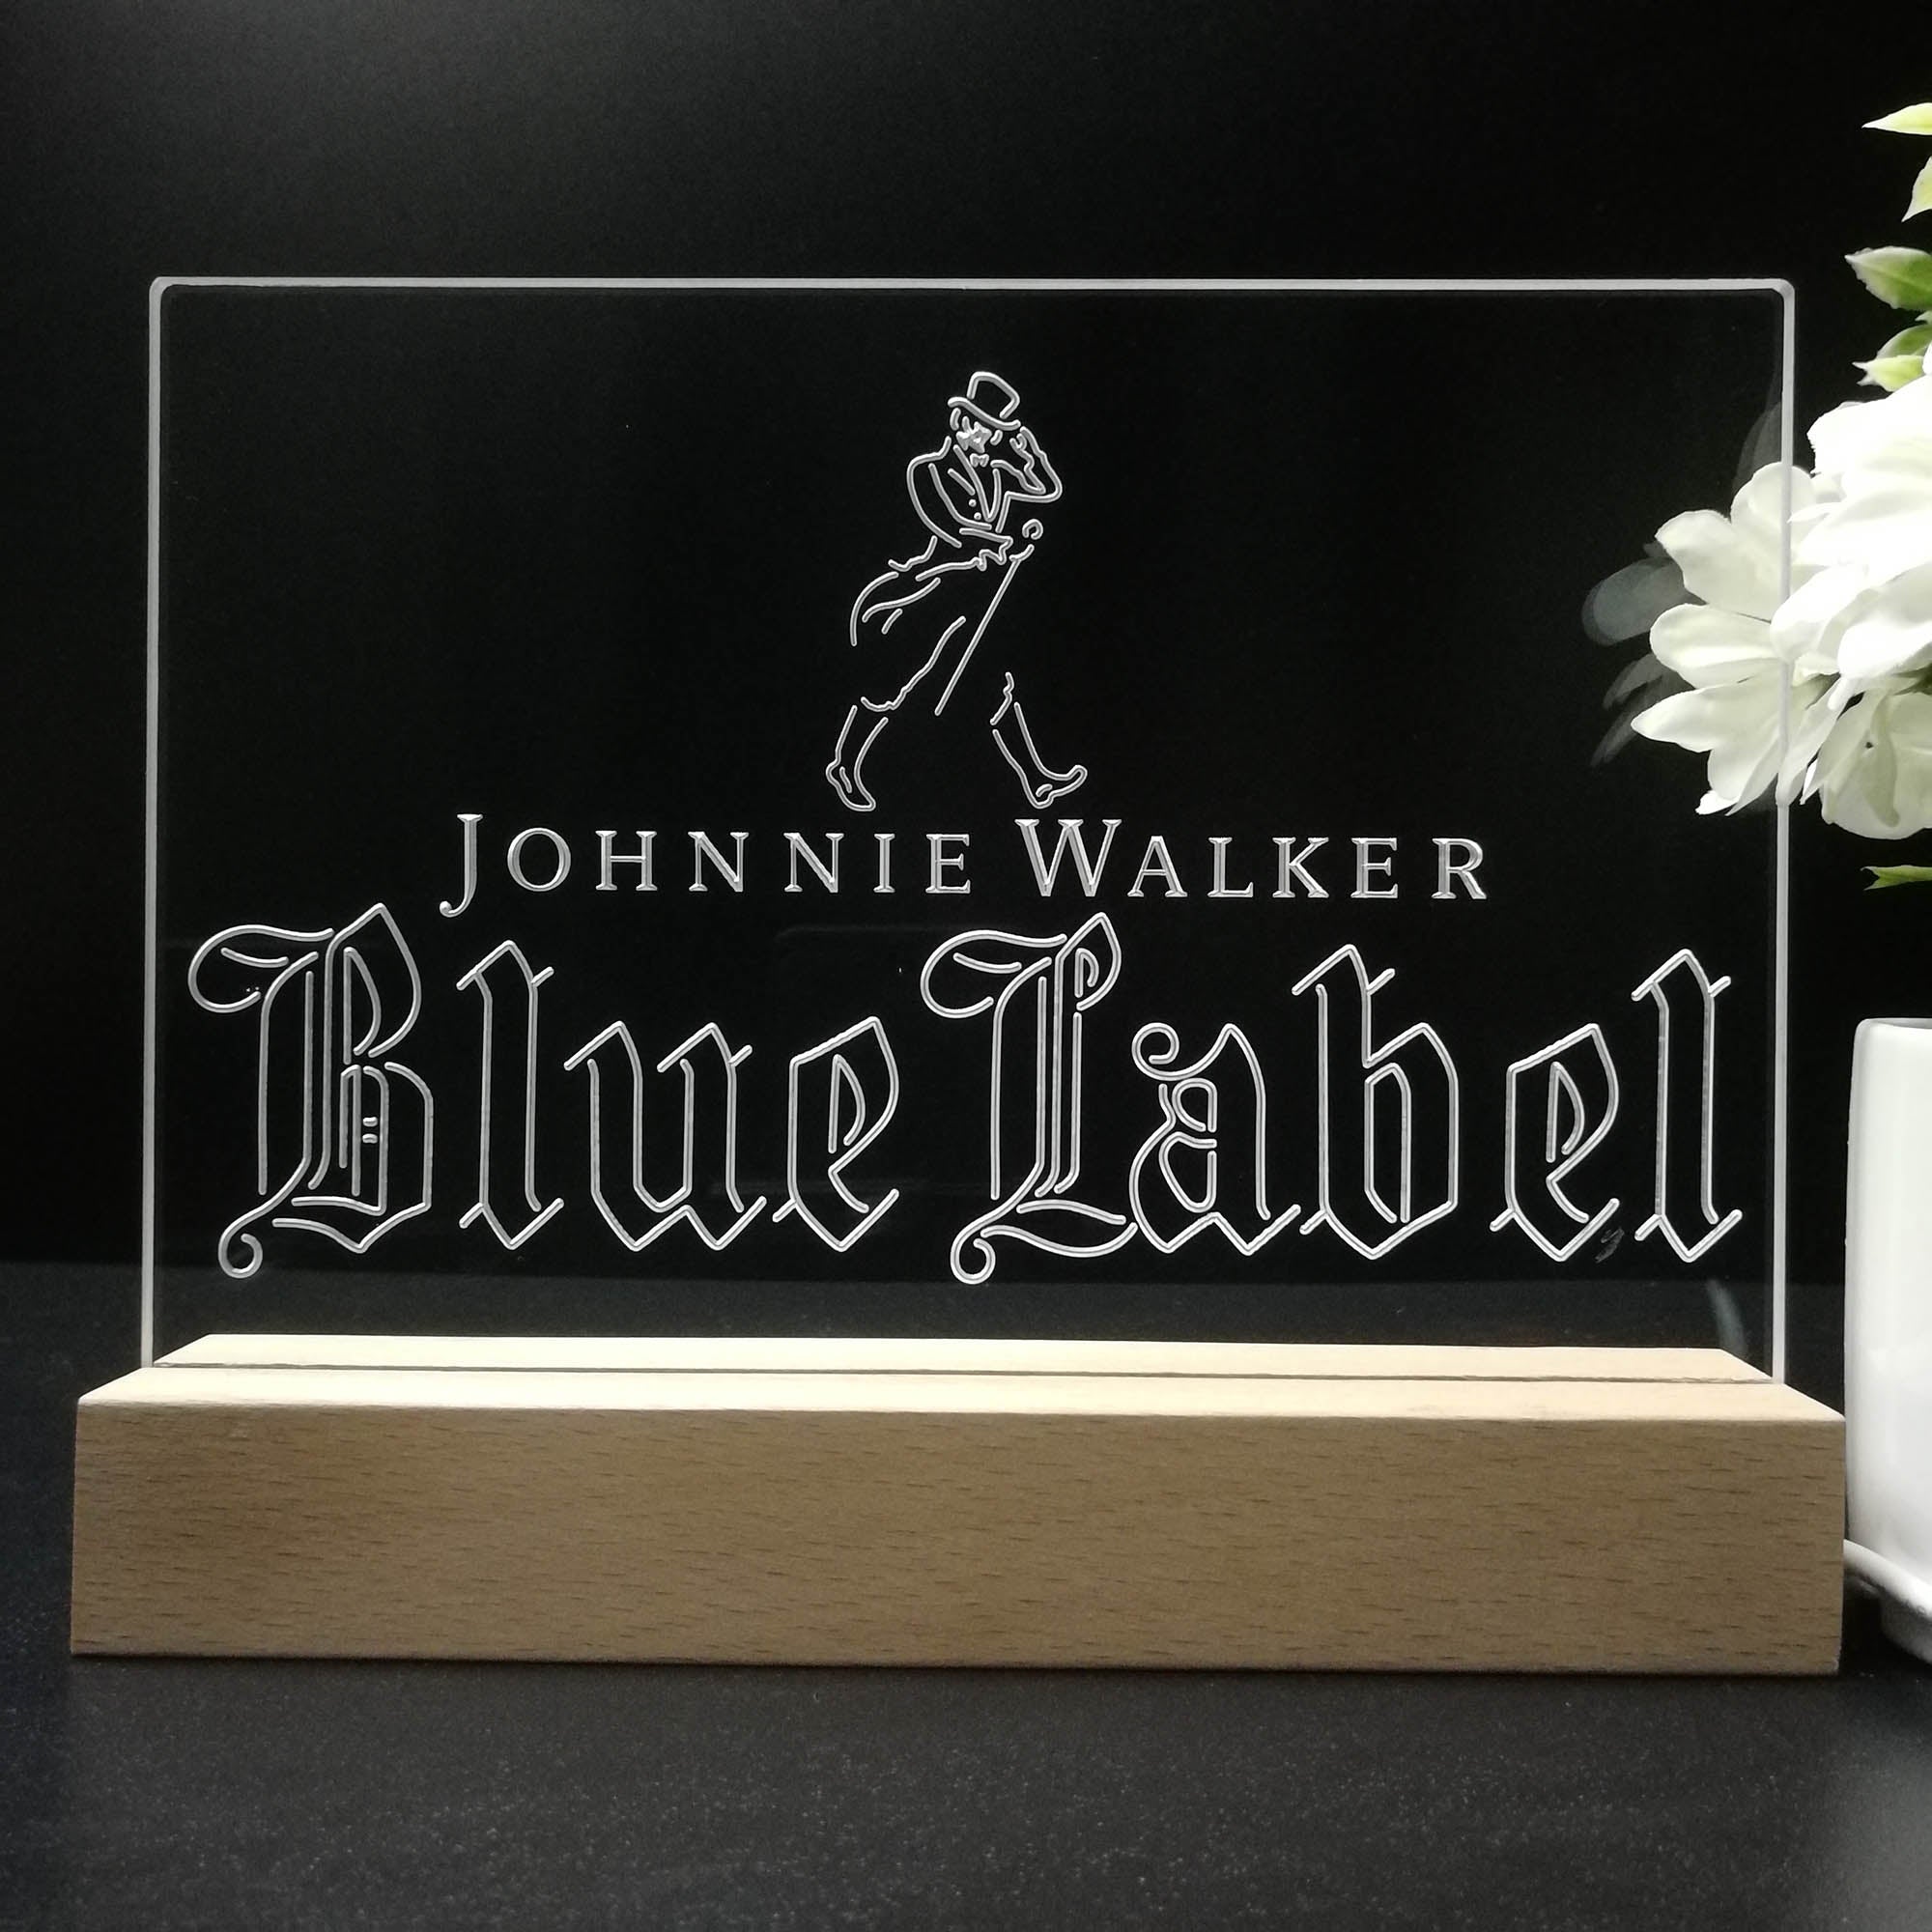 Johnnie Walker Blue Label Whiskey Neon Sign Pub Bar Lamp